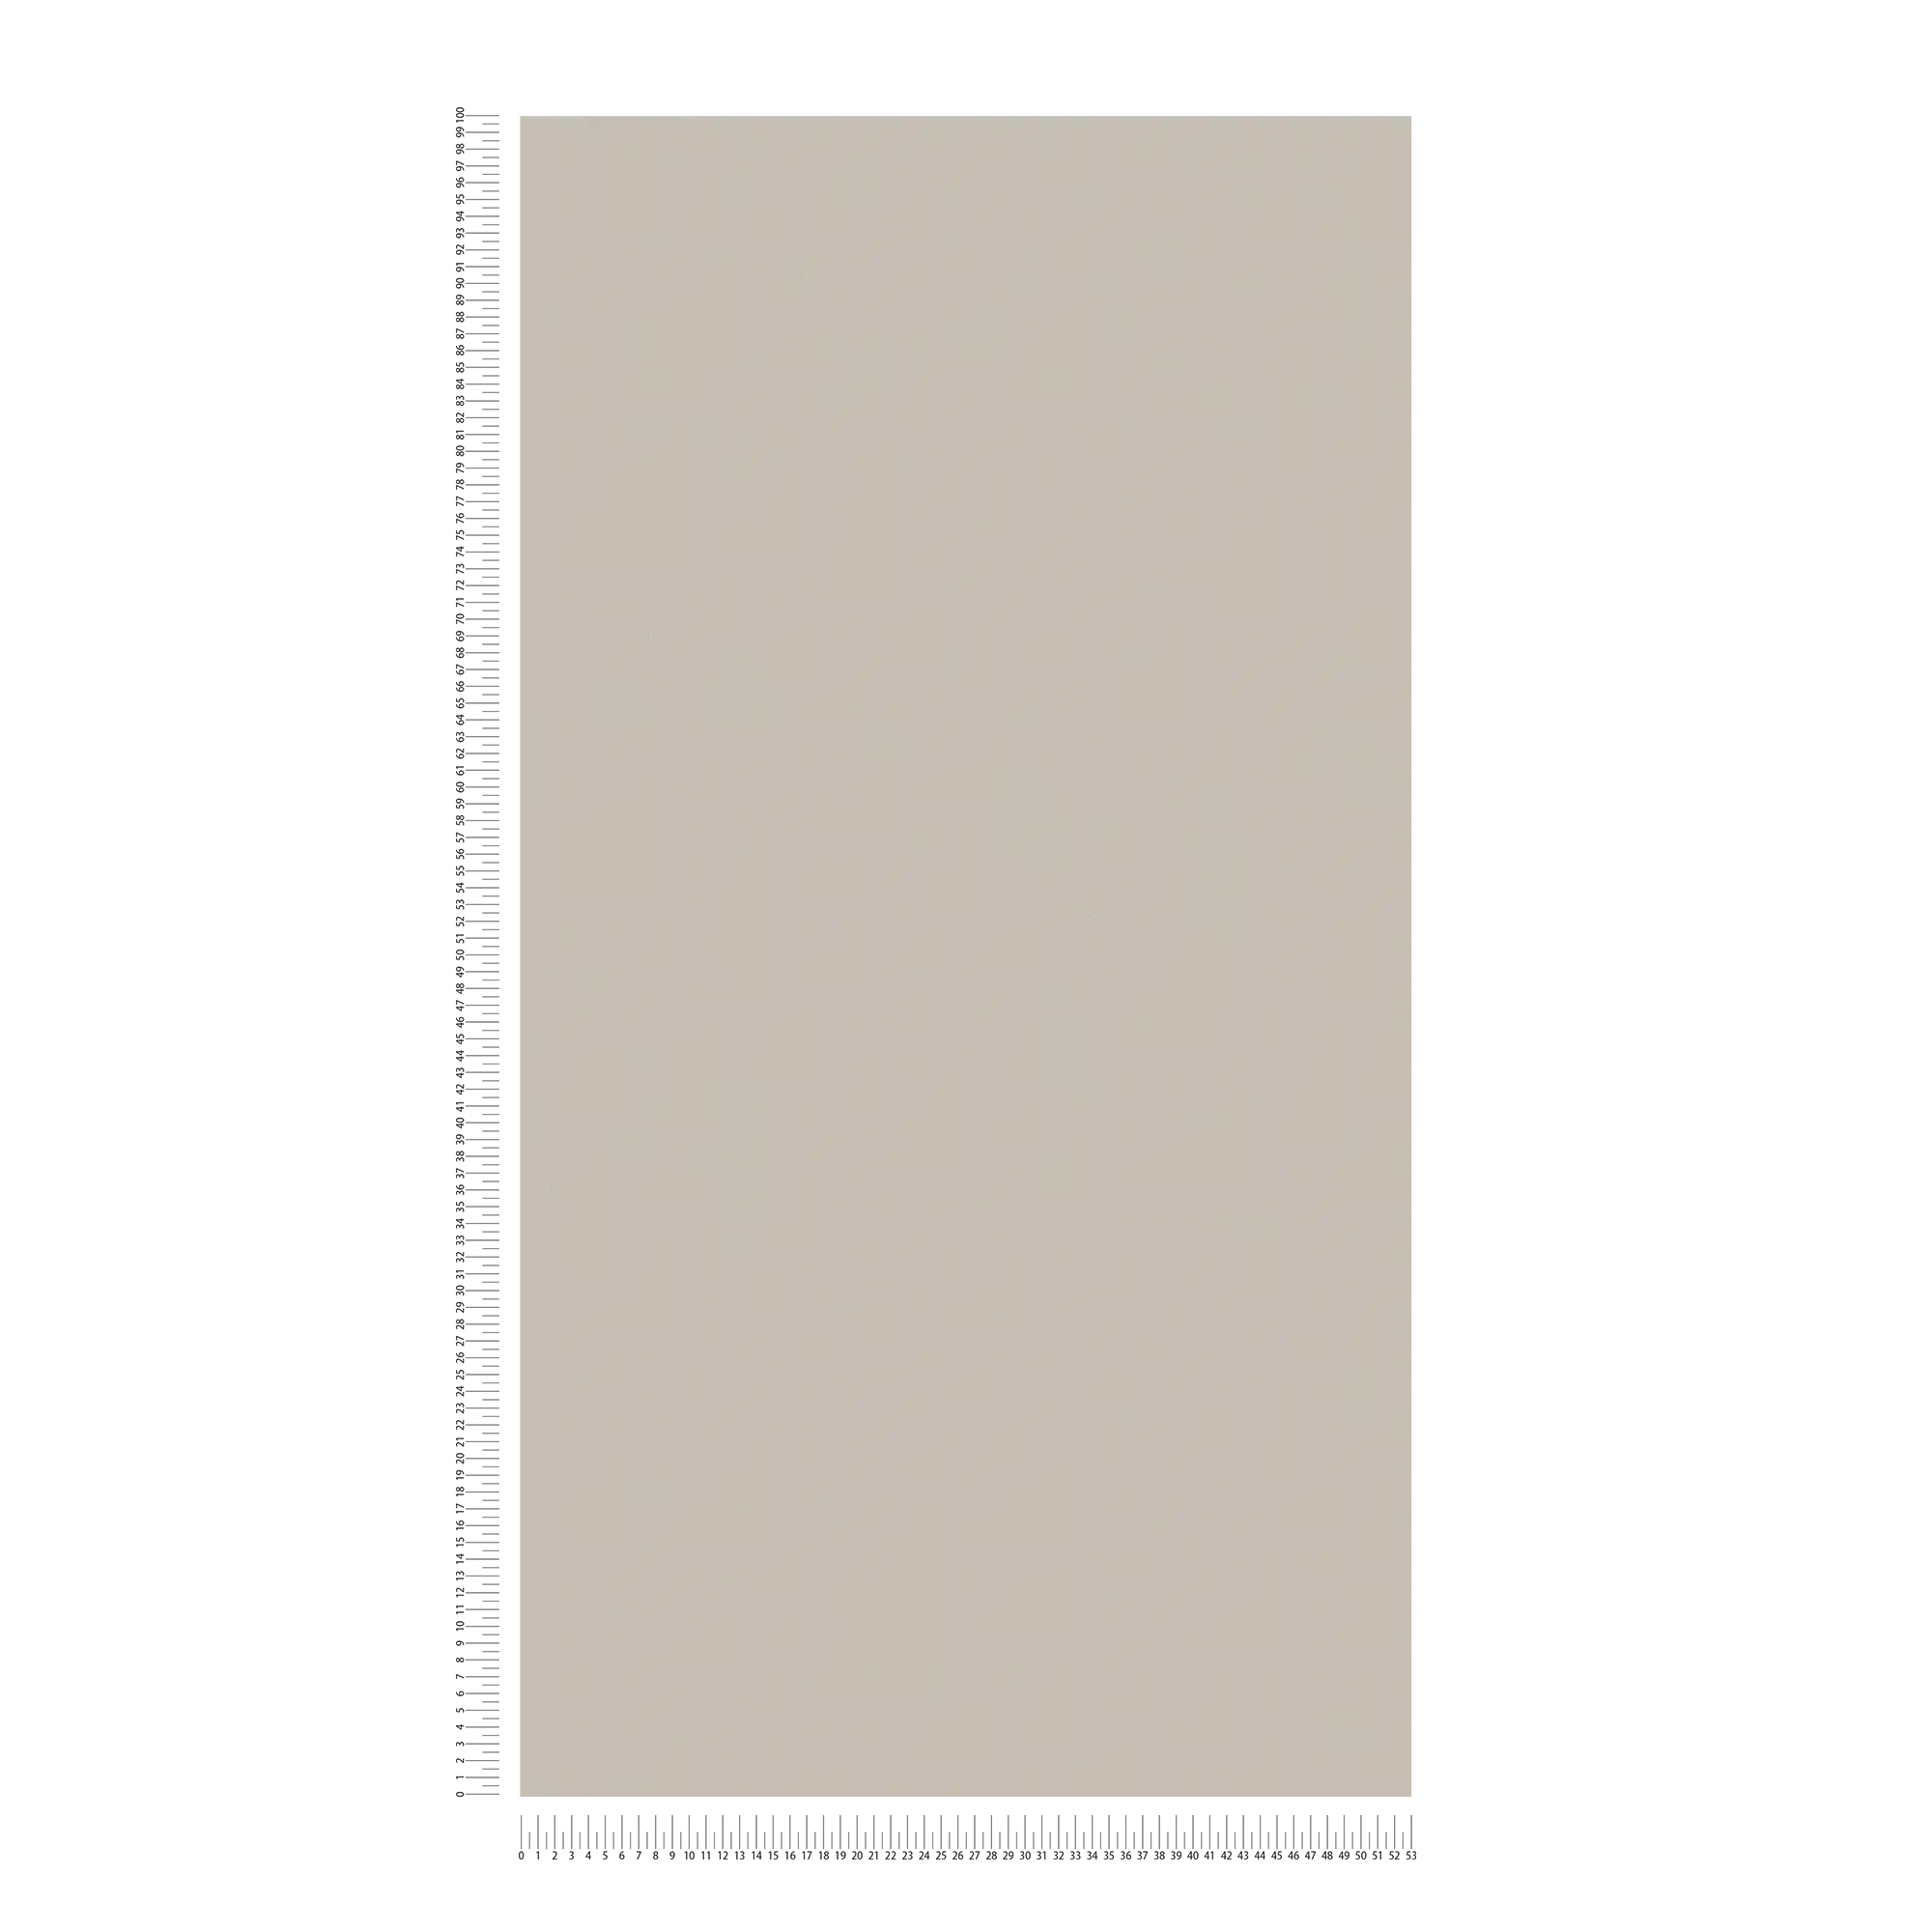             Plain wallpaper warm colour, textured - brown, grey
        